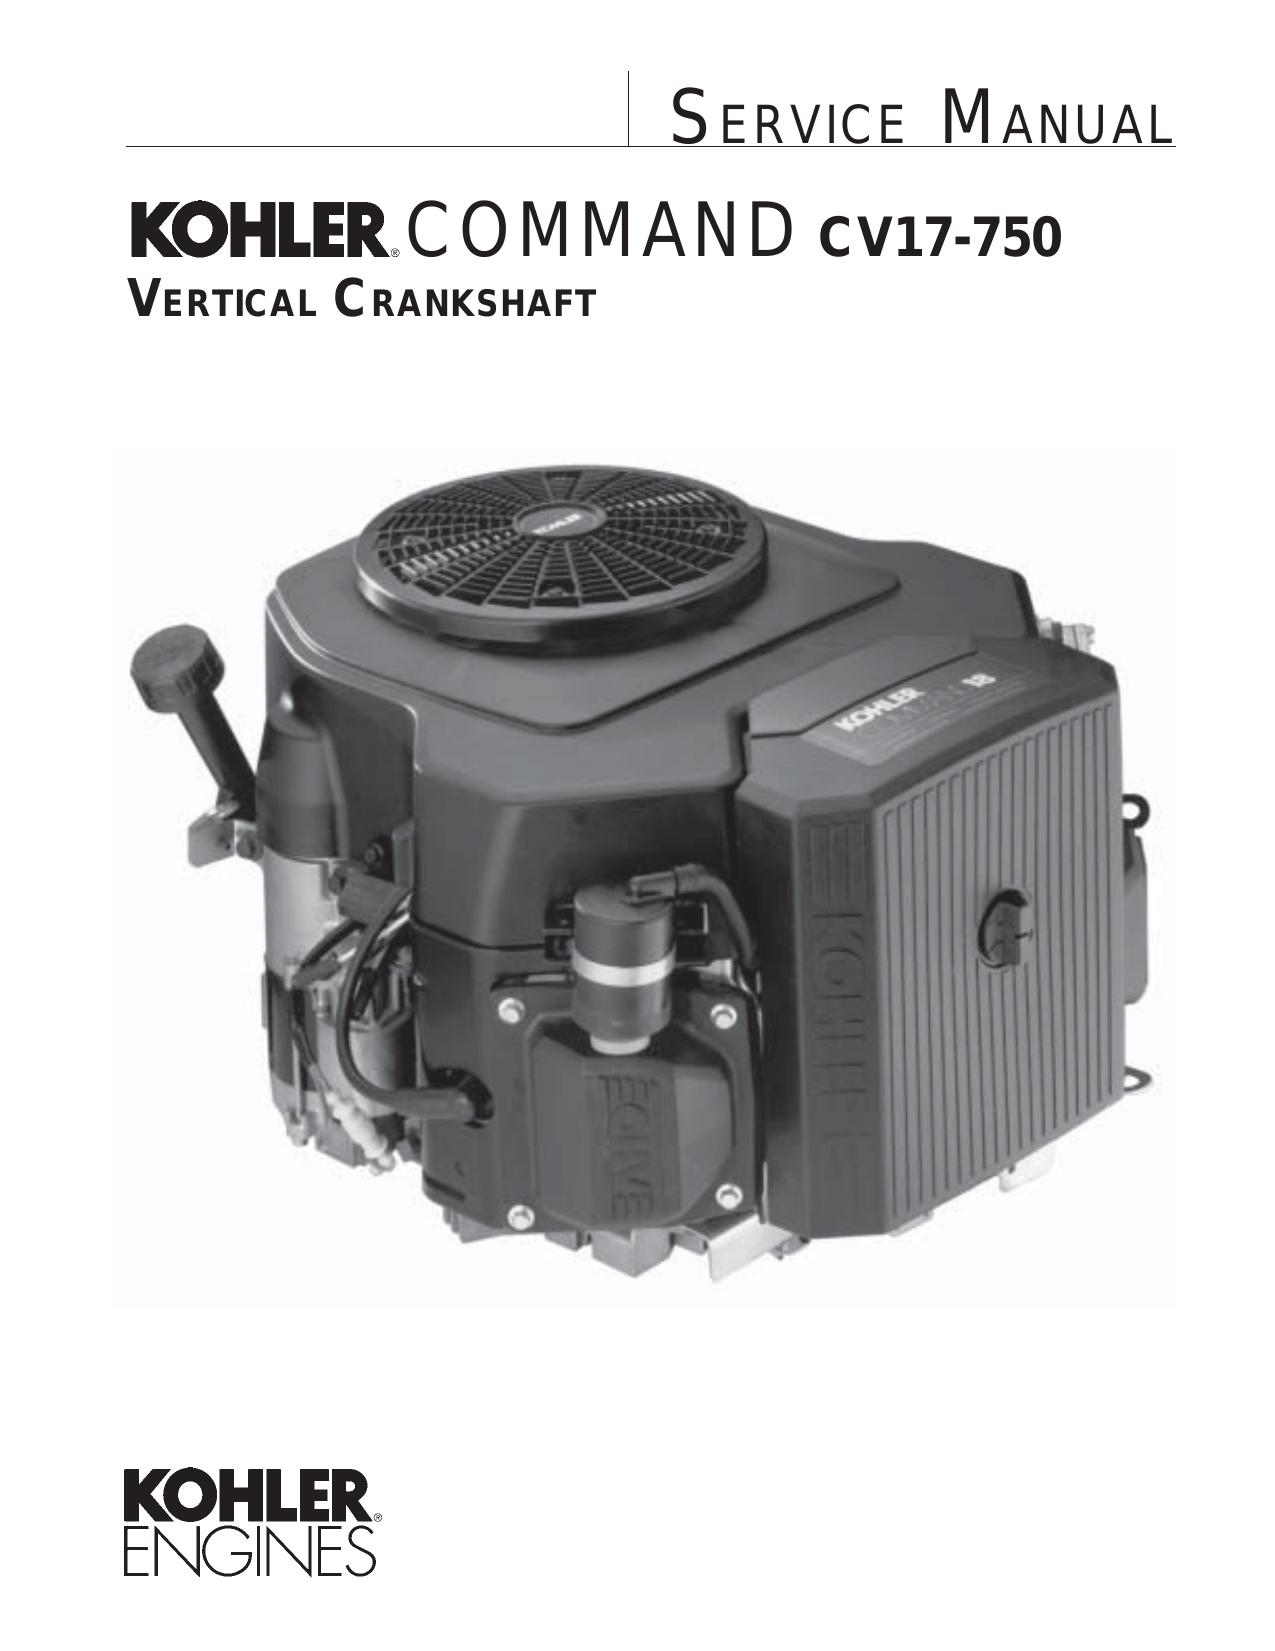 Kohler Command CV 17, CV 18, CV 20, CV 22, CV 23, CV 25, CV 26, CV 730, CV 740, CV 745, CV 750 vertical crankshaft service manual Preview image 1